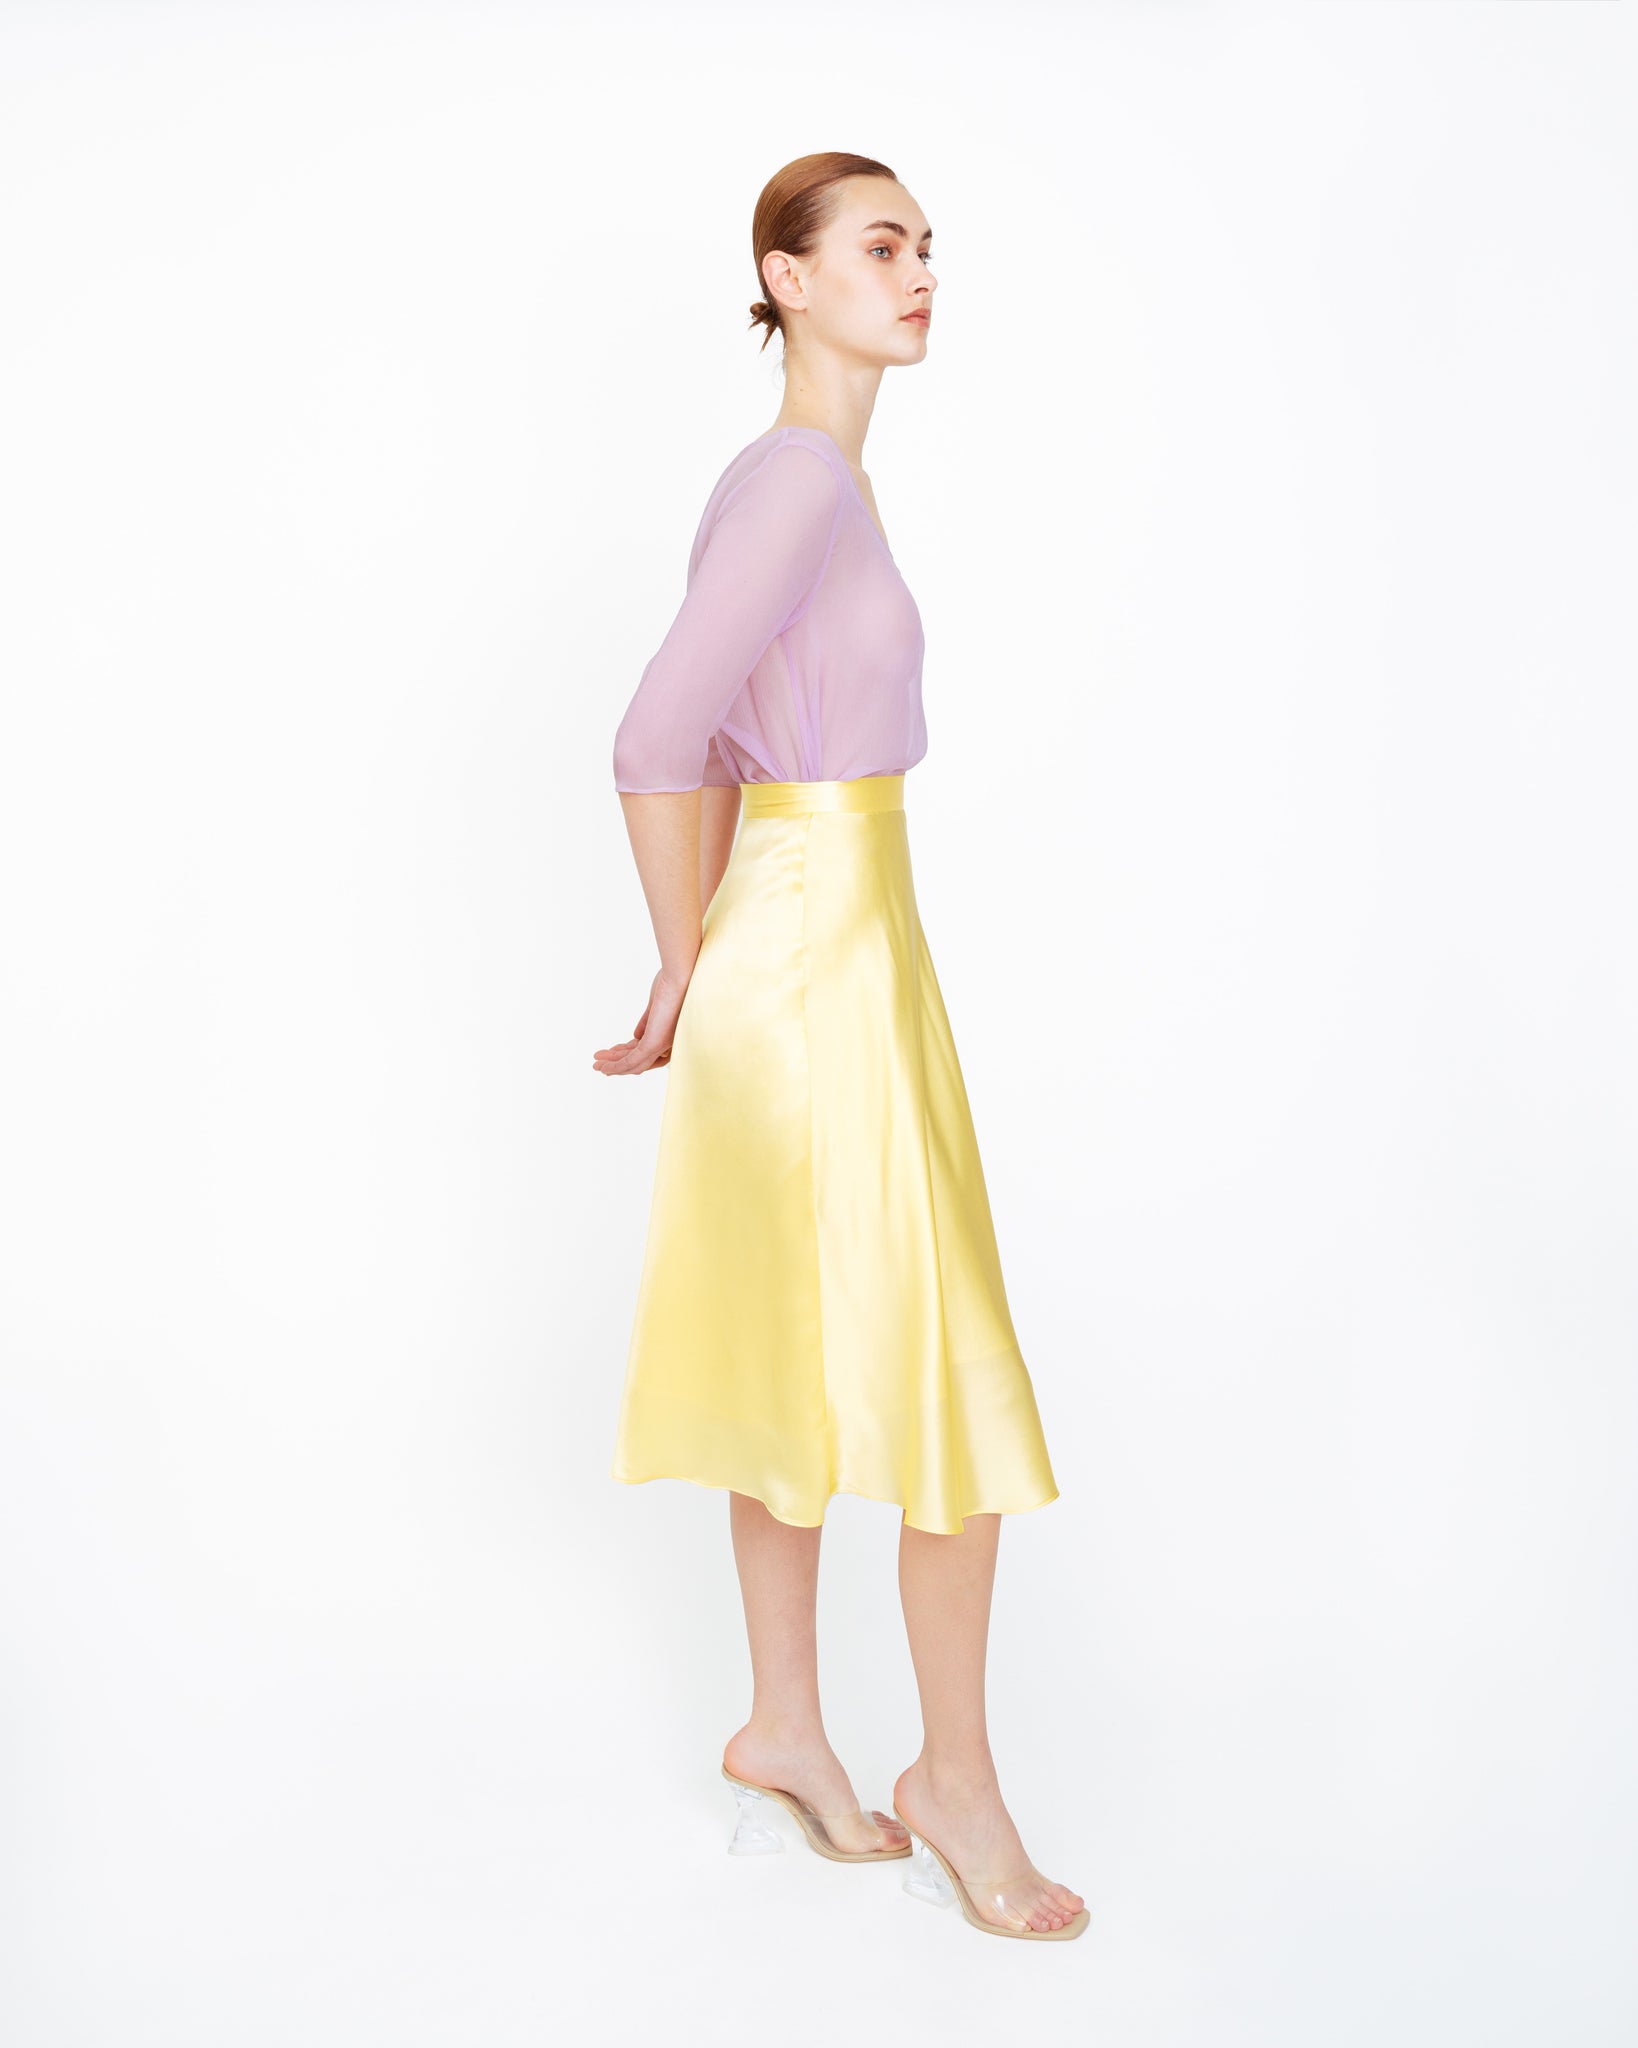 #silkmidiskirt #silkskirt #yellowsilkskirt #lemonskirt 